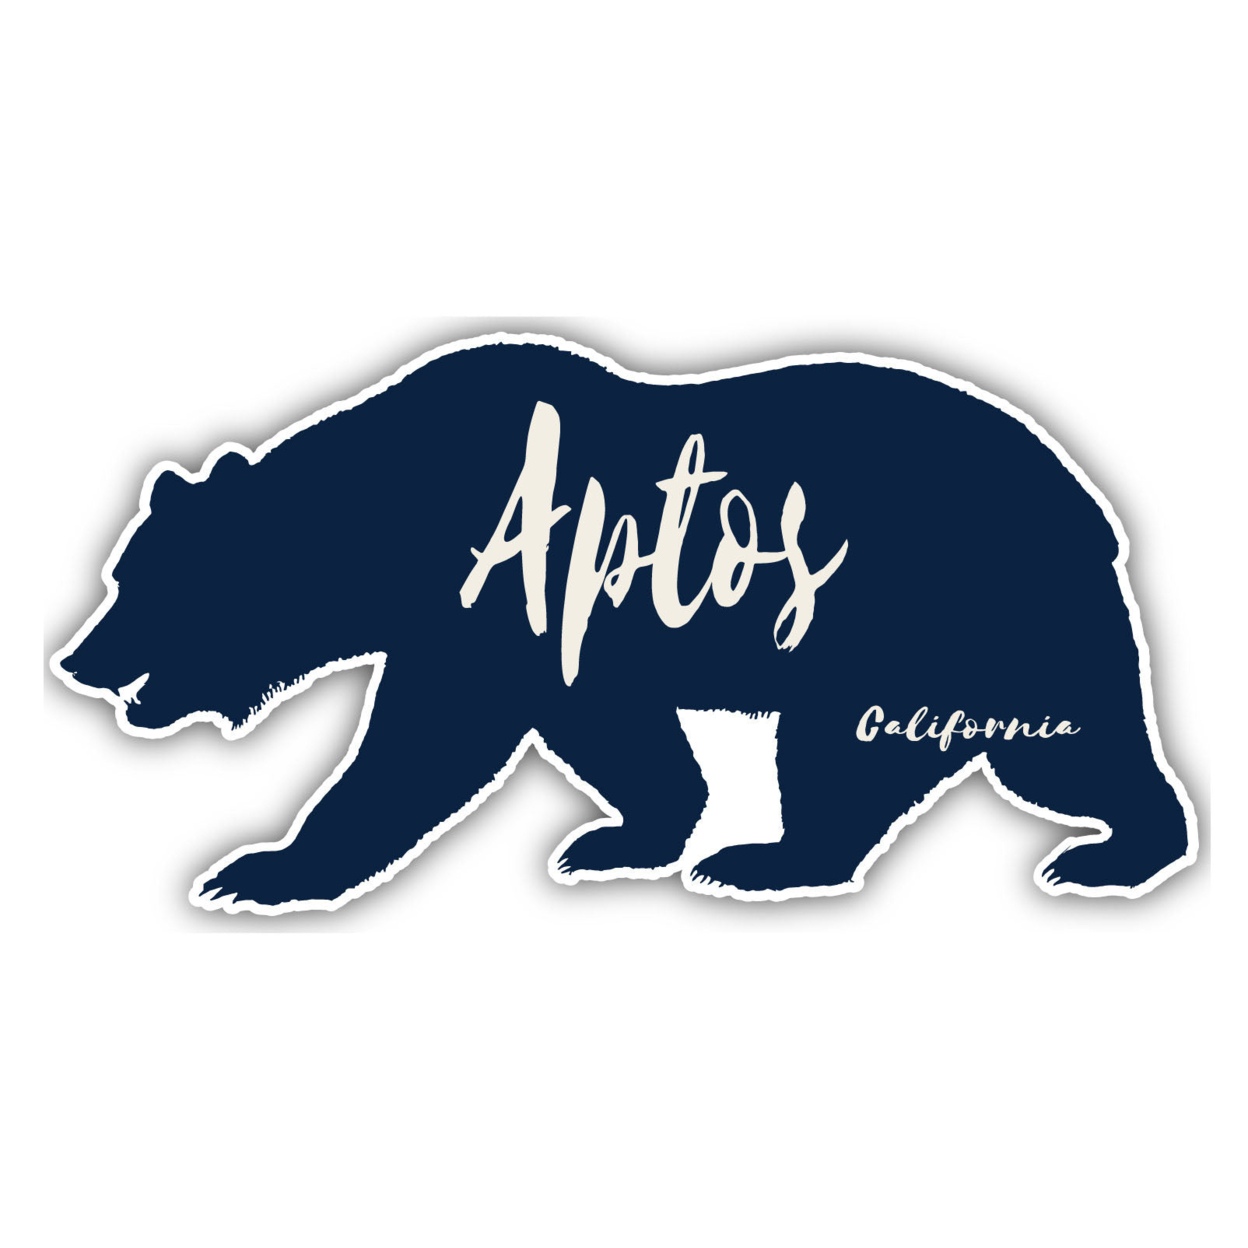 Aptos California Souvenir Decorative Stickers (Choose Theme And Size) - 4-Pack, 6-Inch, Adventures Awaits